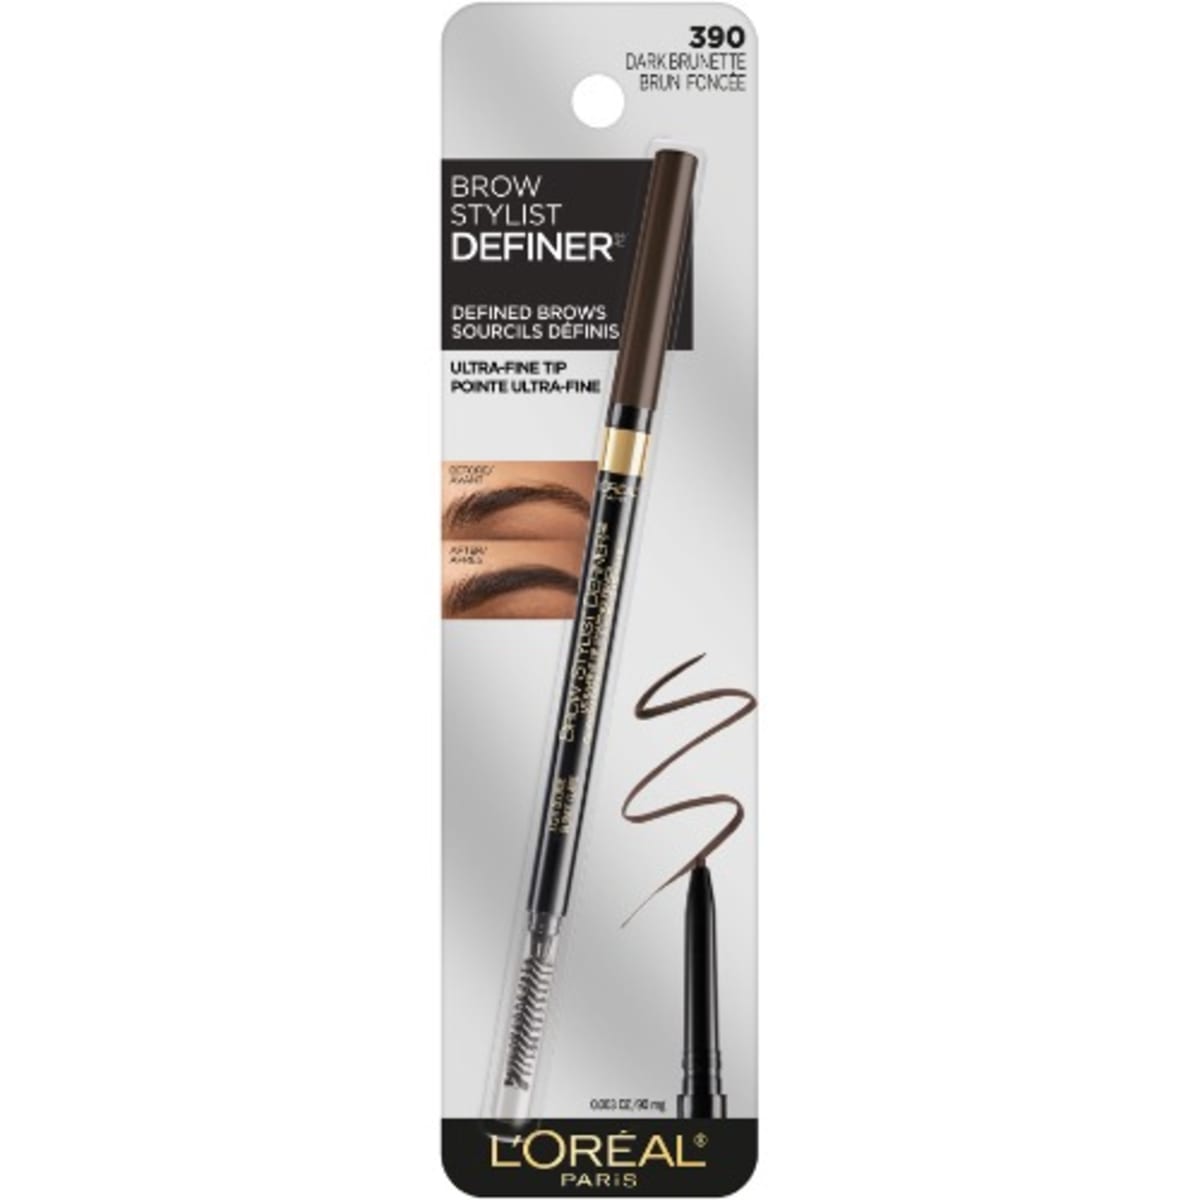 L'Oreal Brow Stylist Definer Waterproof Eyebrow Pencil- Dark